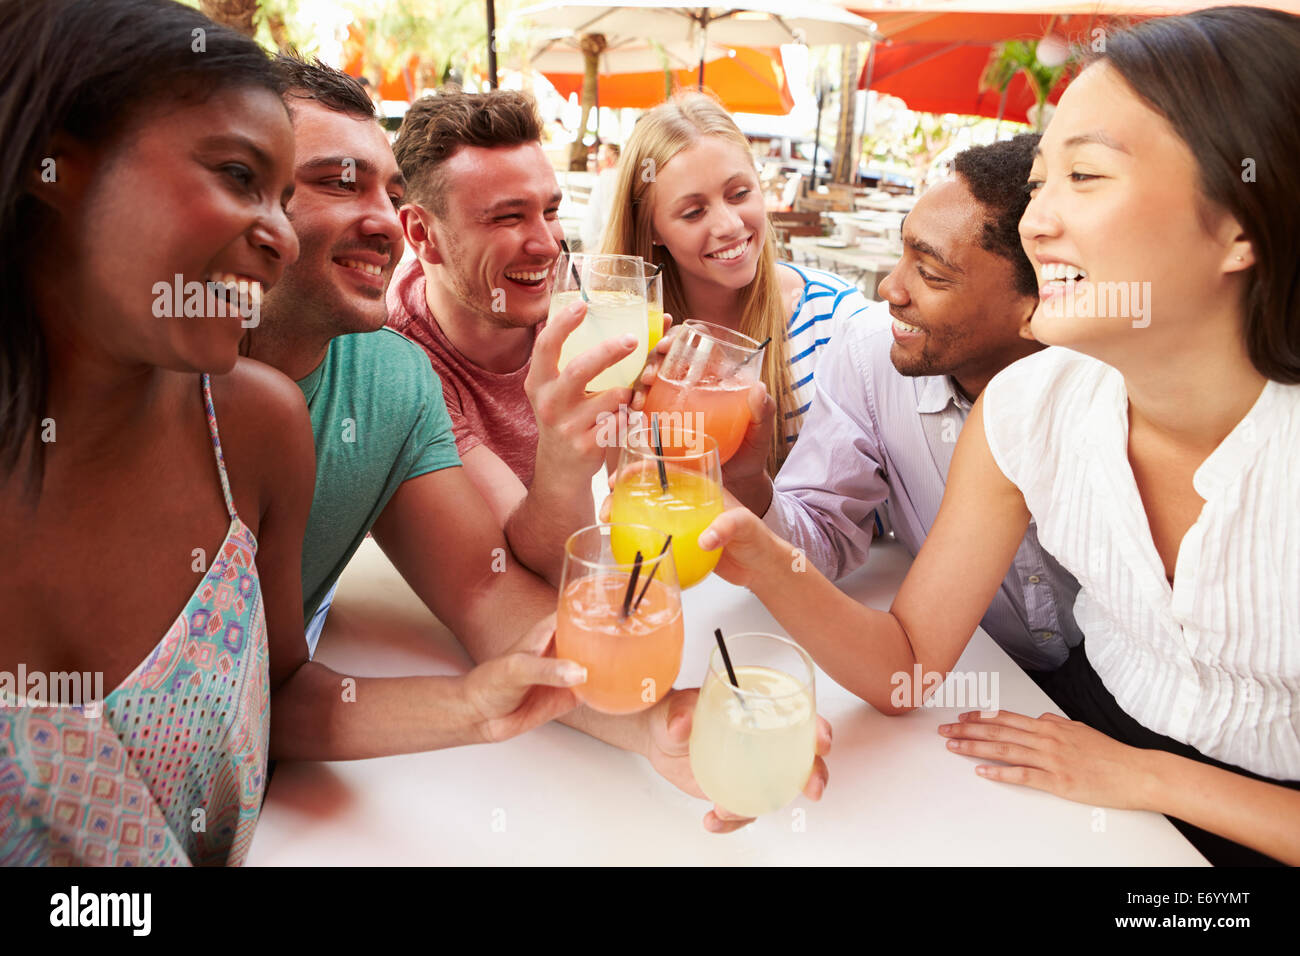 Group Of Friends Enjoying Drinks In Outdoor Restaurant Stock Photo